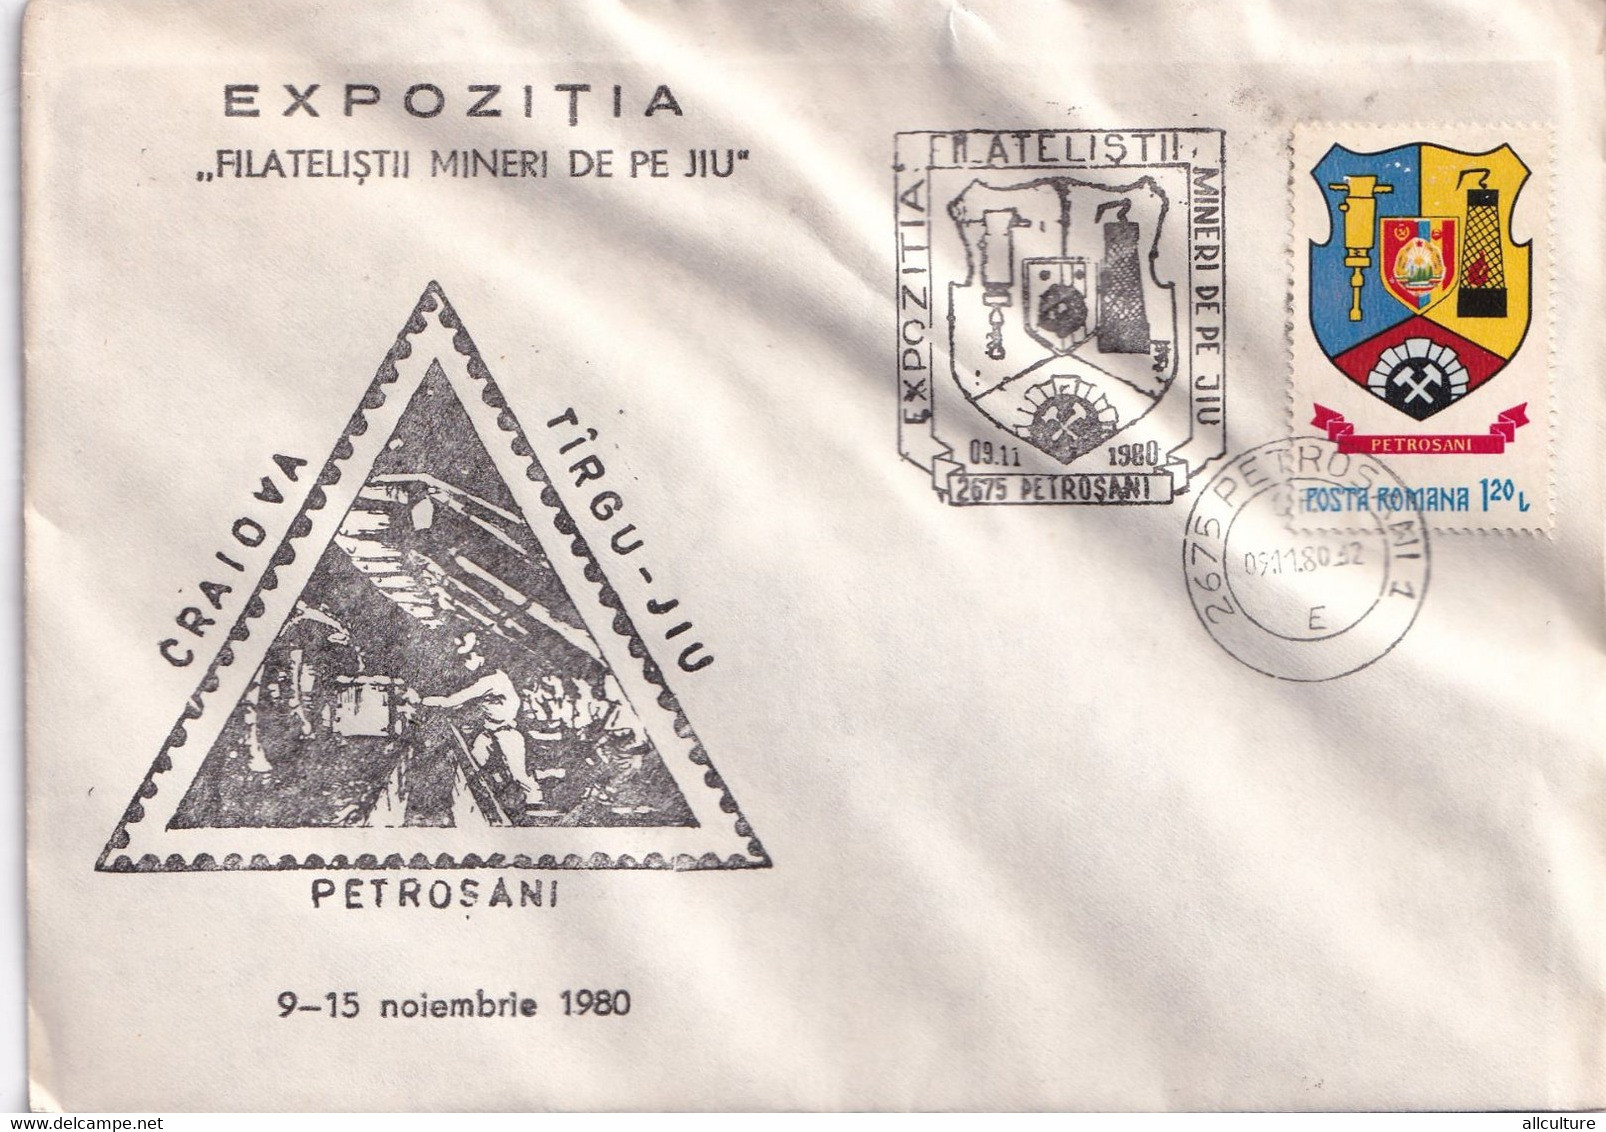 A2833 - Expozitia " Filatelistii Mineri De Pe Jiu" Targu Jiu, Craiova, Petrosani 1980 Romania - Lettres & Documents